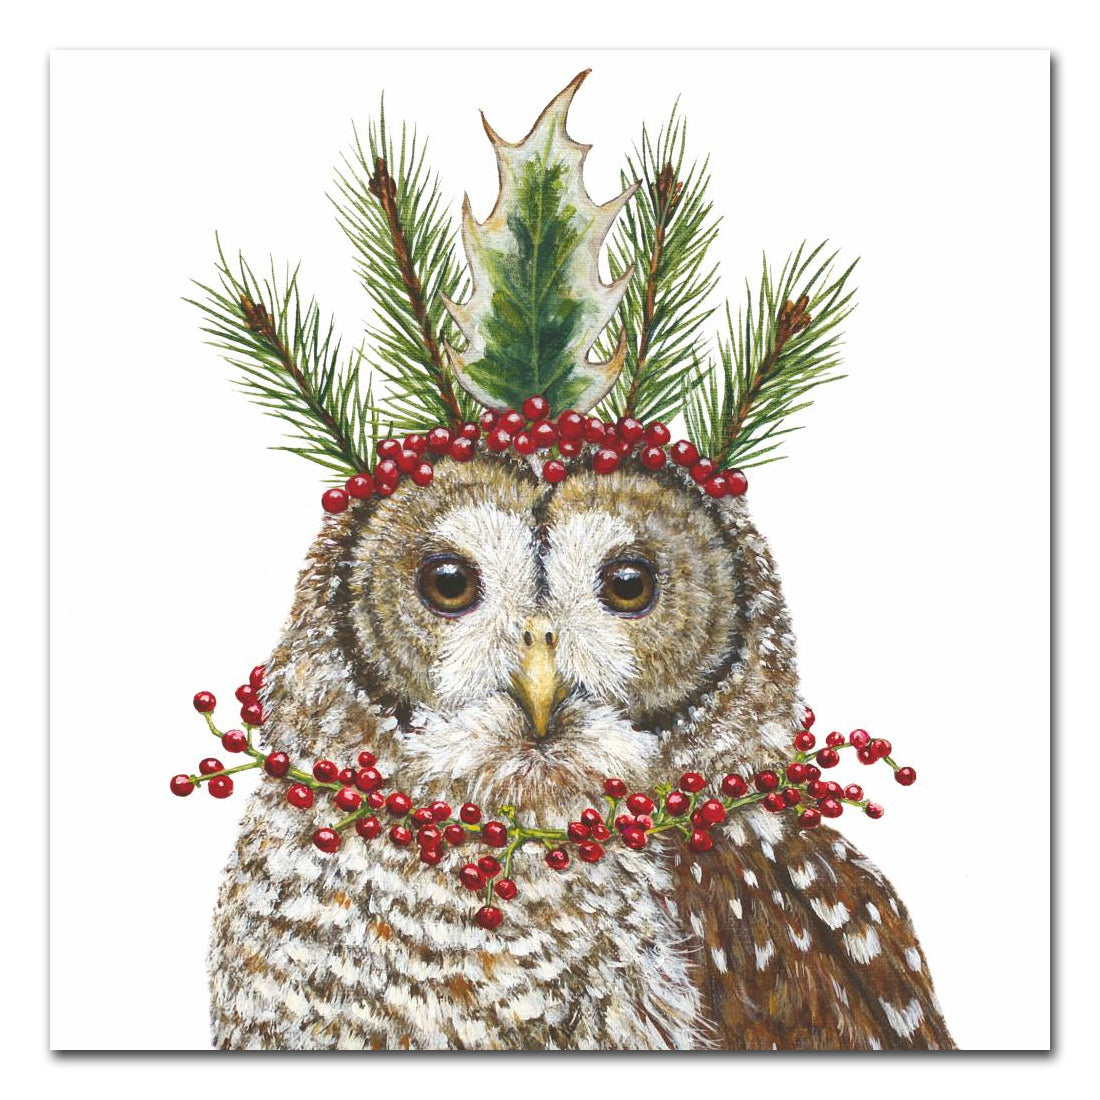 Candace The Christmas Owl Luncheon Napkins by Vicki Sawyer